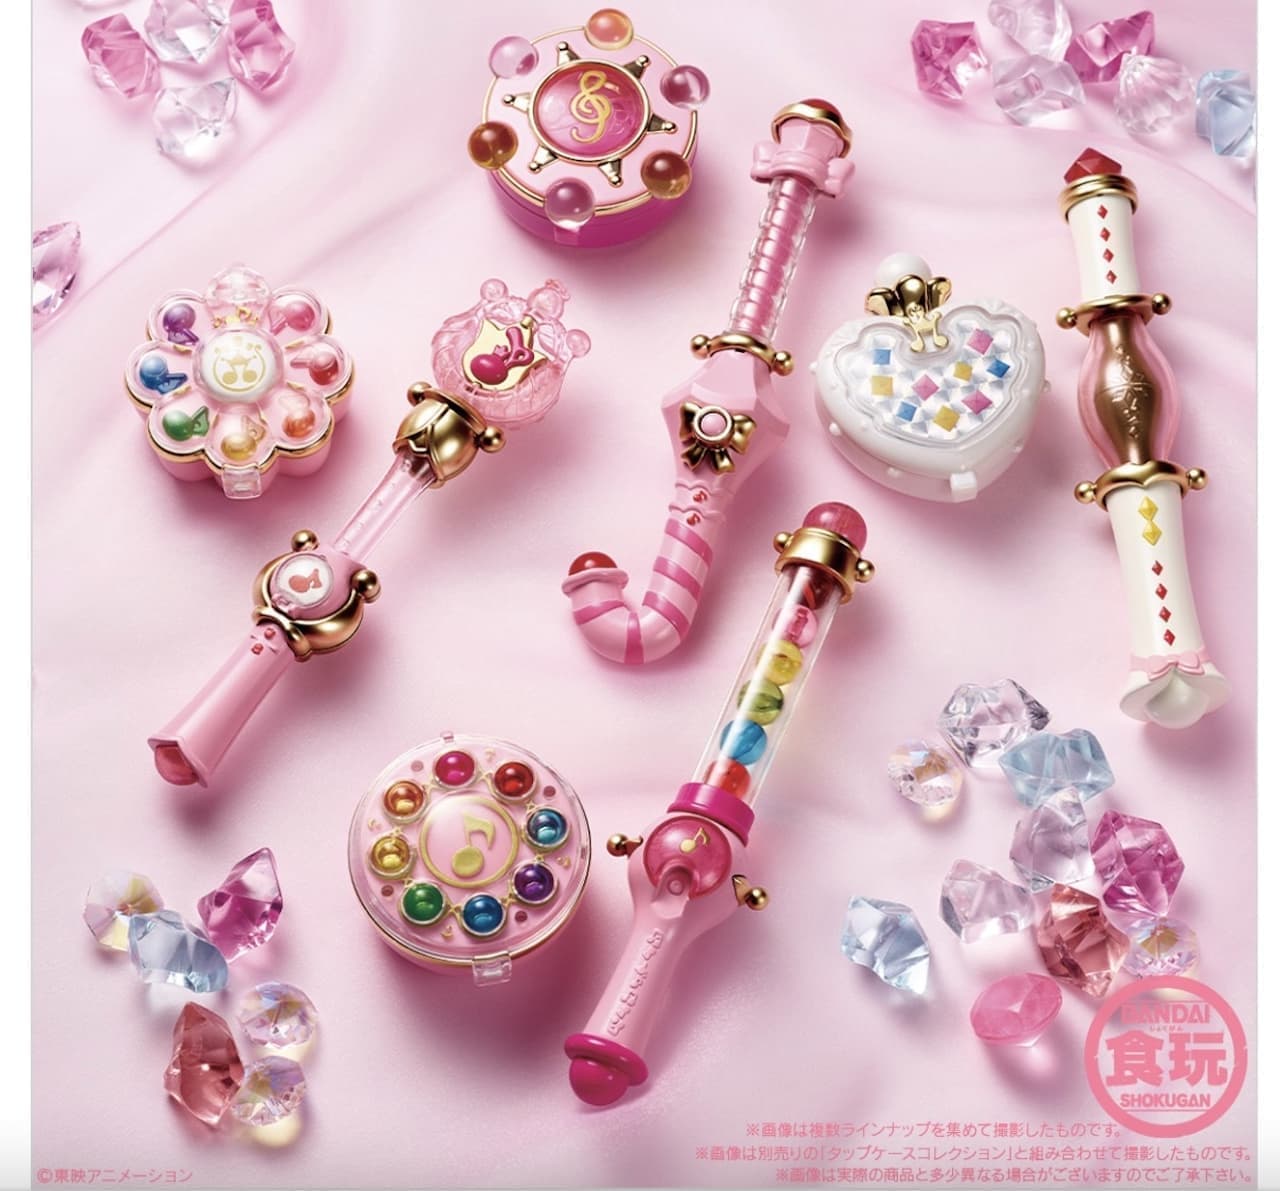 Bandai Candy Division "Ojamajo Doremi Pirika Pirira Rara Poron Collection